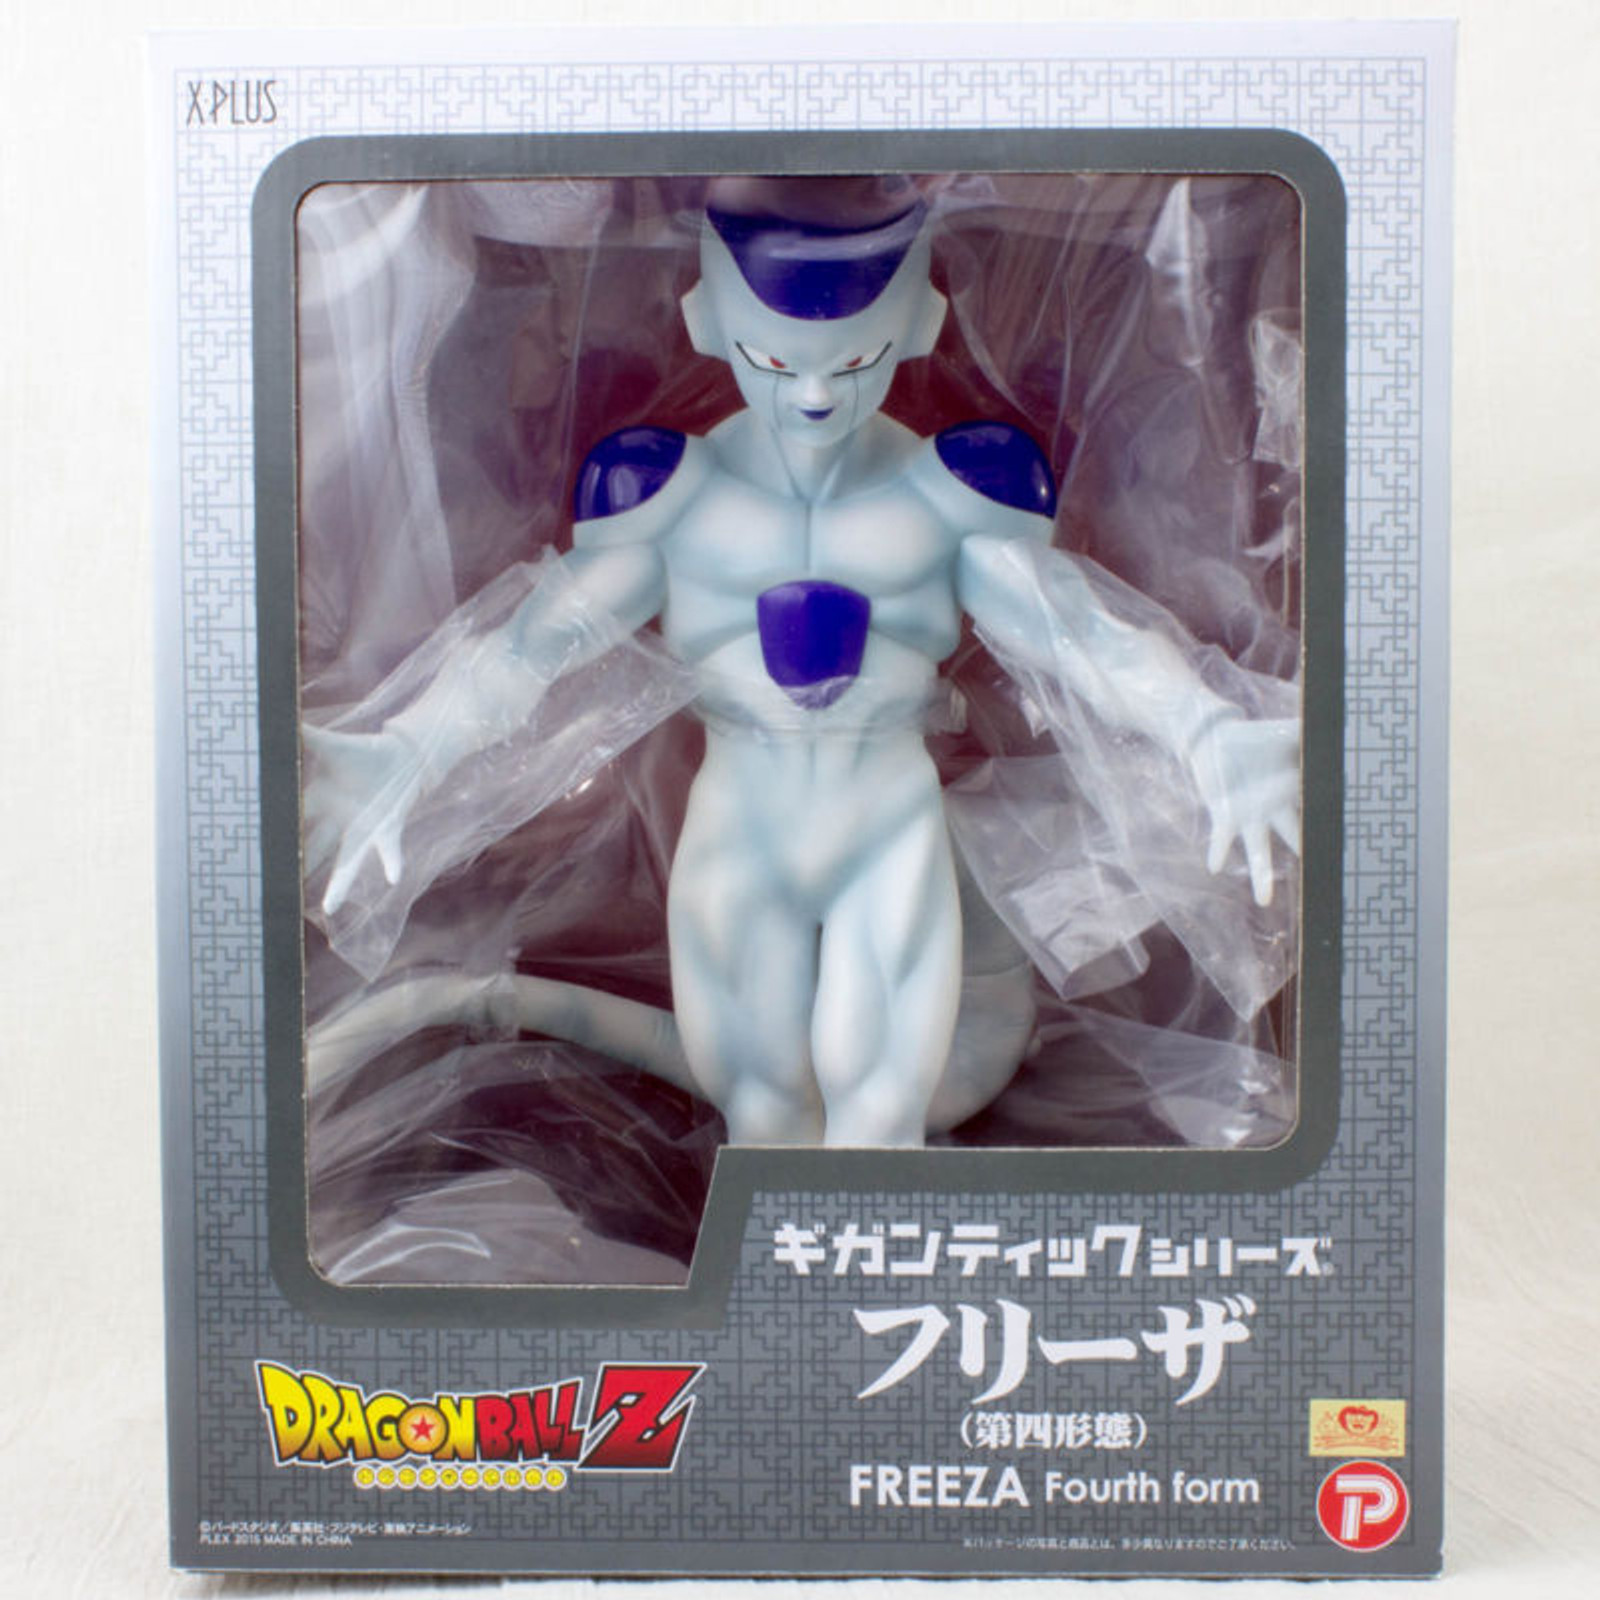 Dragon Ball Z Freeza Final Form 12"  Figure Gigantic Series Plex JAPAN ANIME